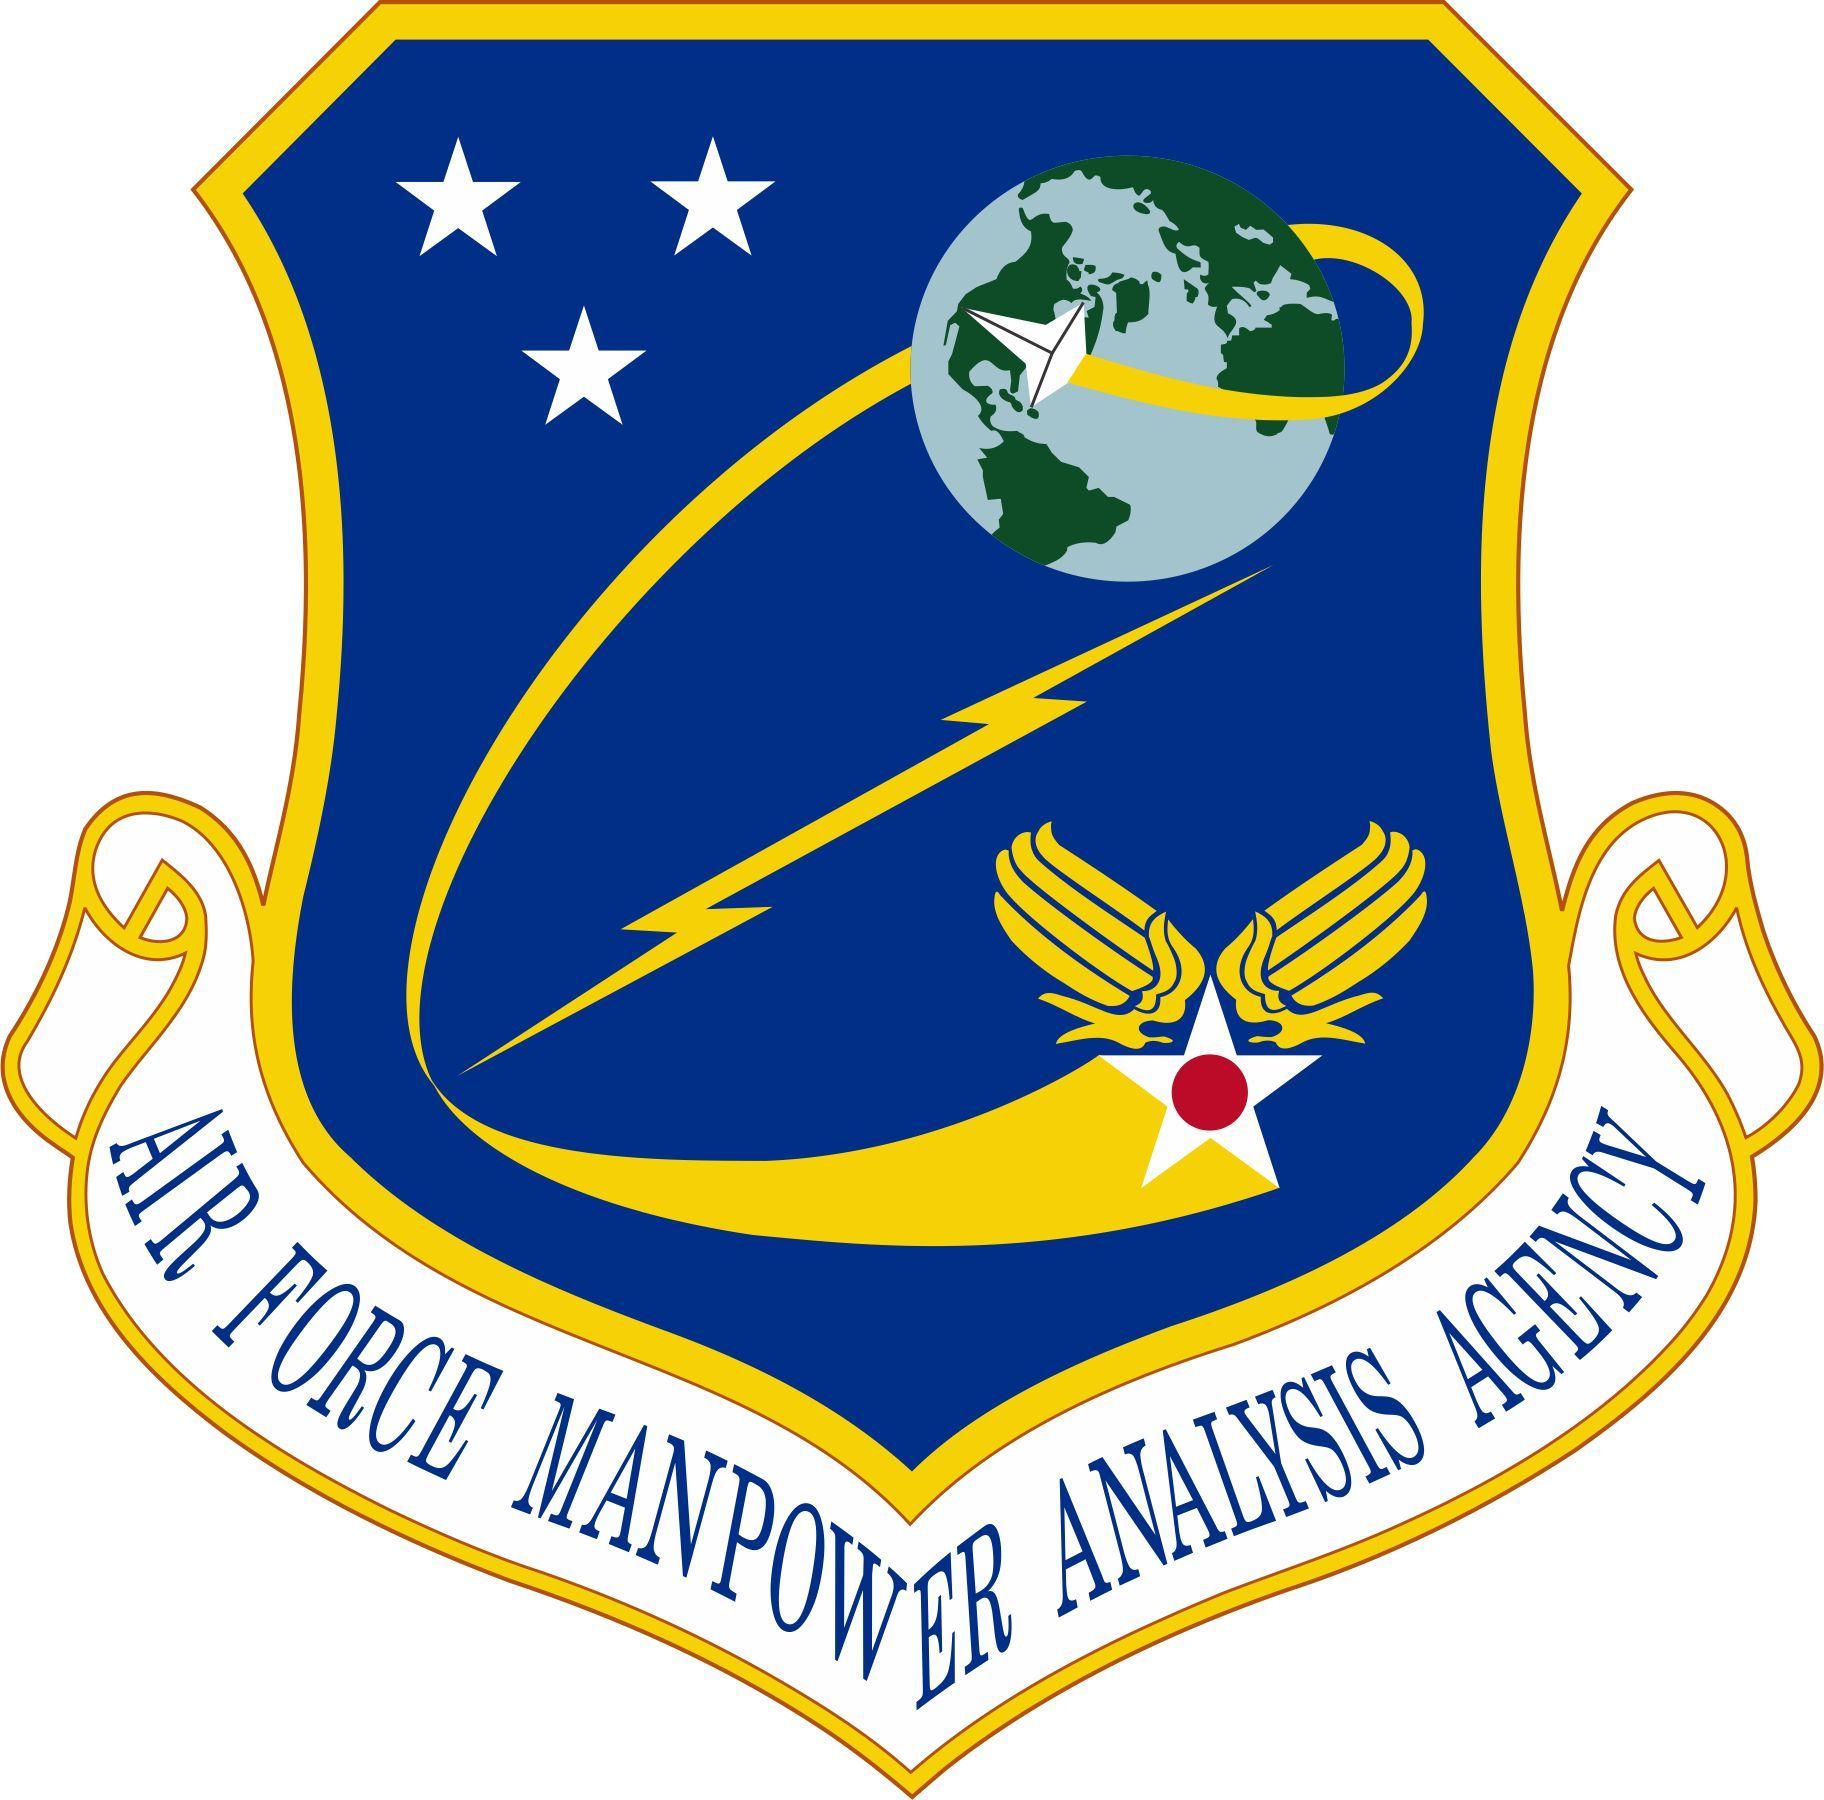 Space Air Force Logo - Air Force Manpower Analysis Agency > U.S. Air Force > Fact Sheet Display